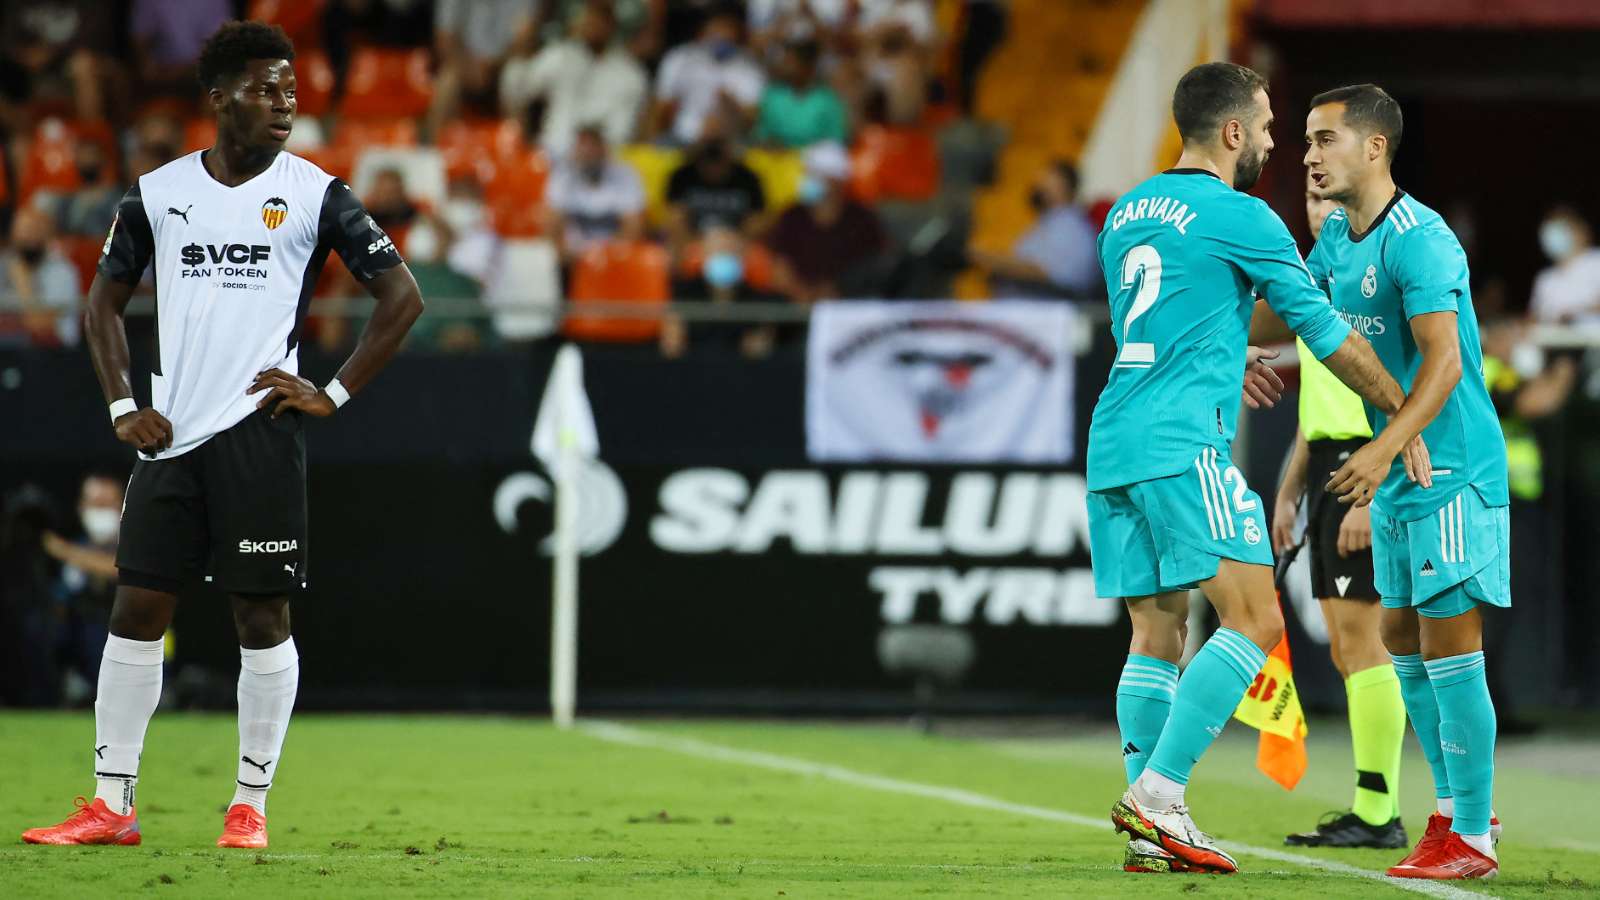 Carvajal, Valencia vs. Real Madrid